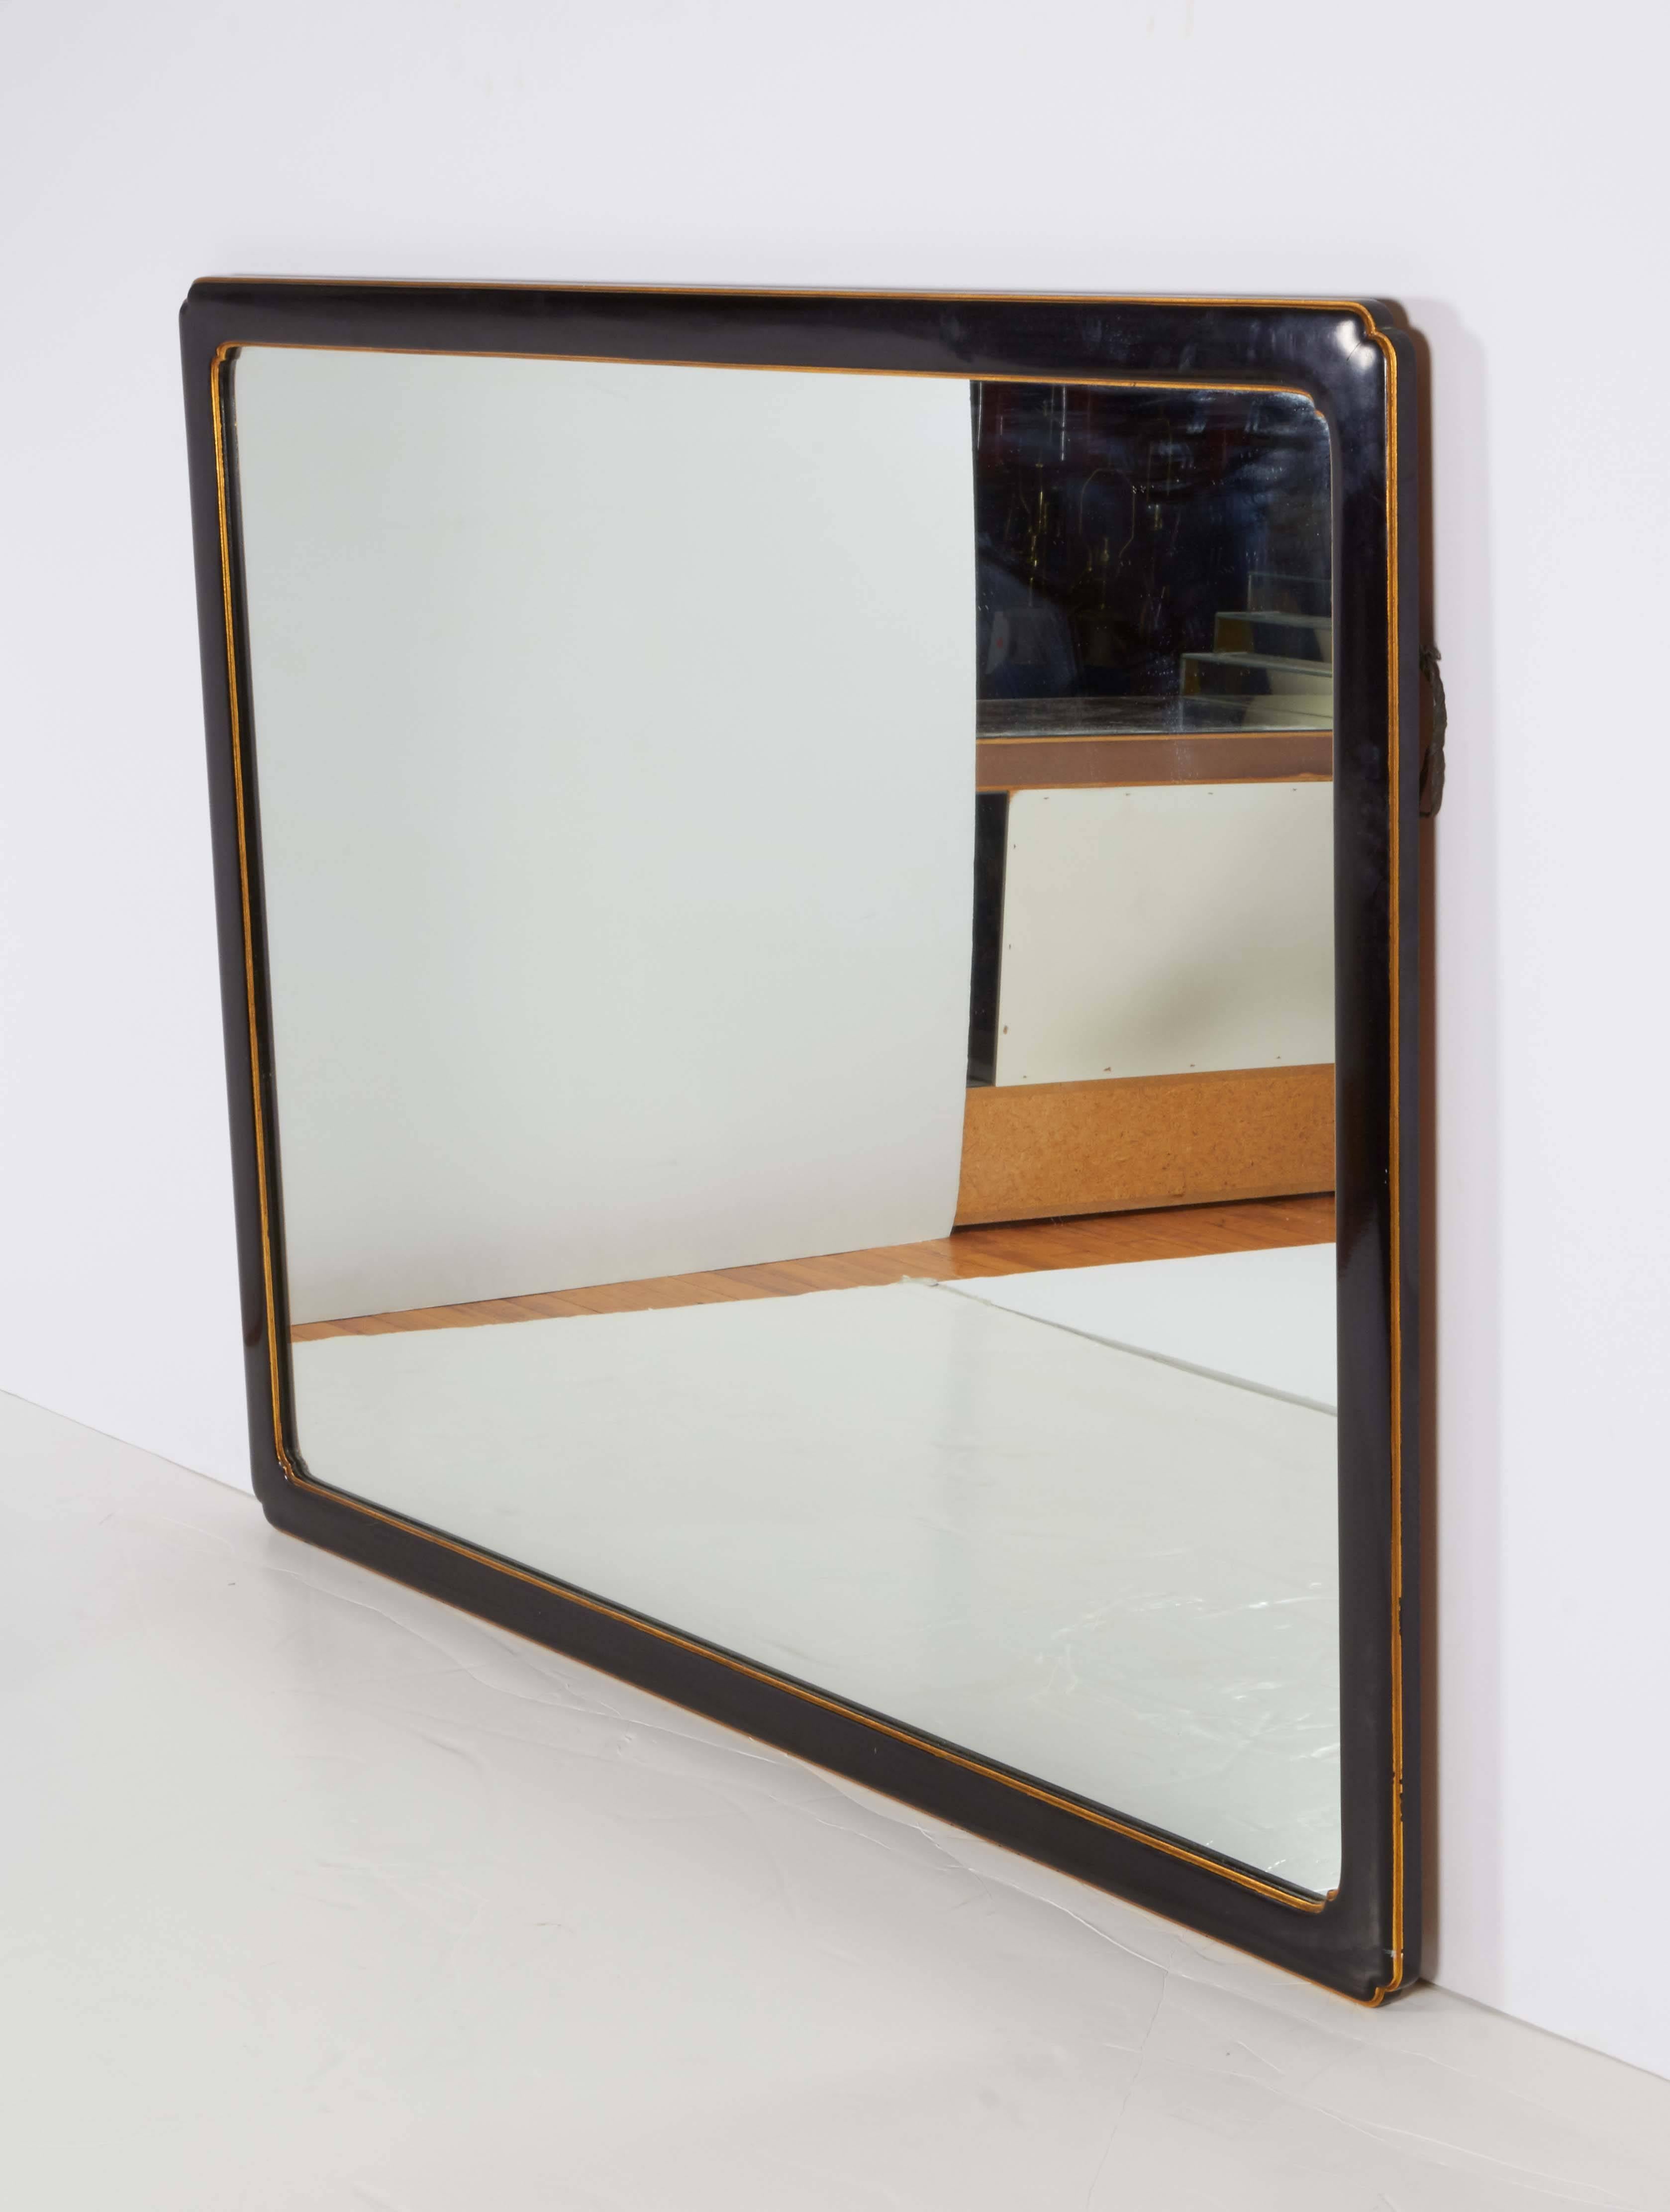 20th Century Ebonized Wall Mirror with Gilt Trim